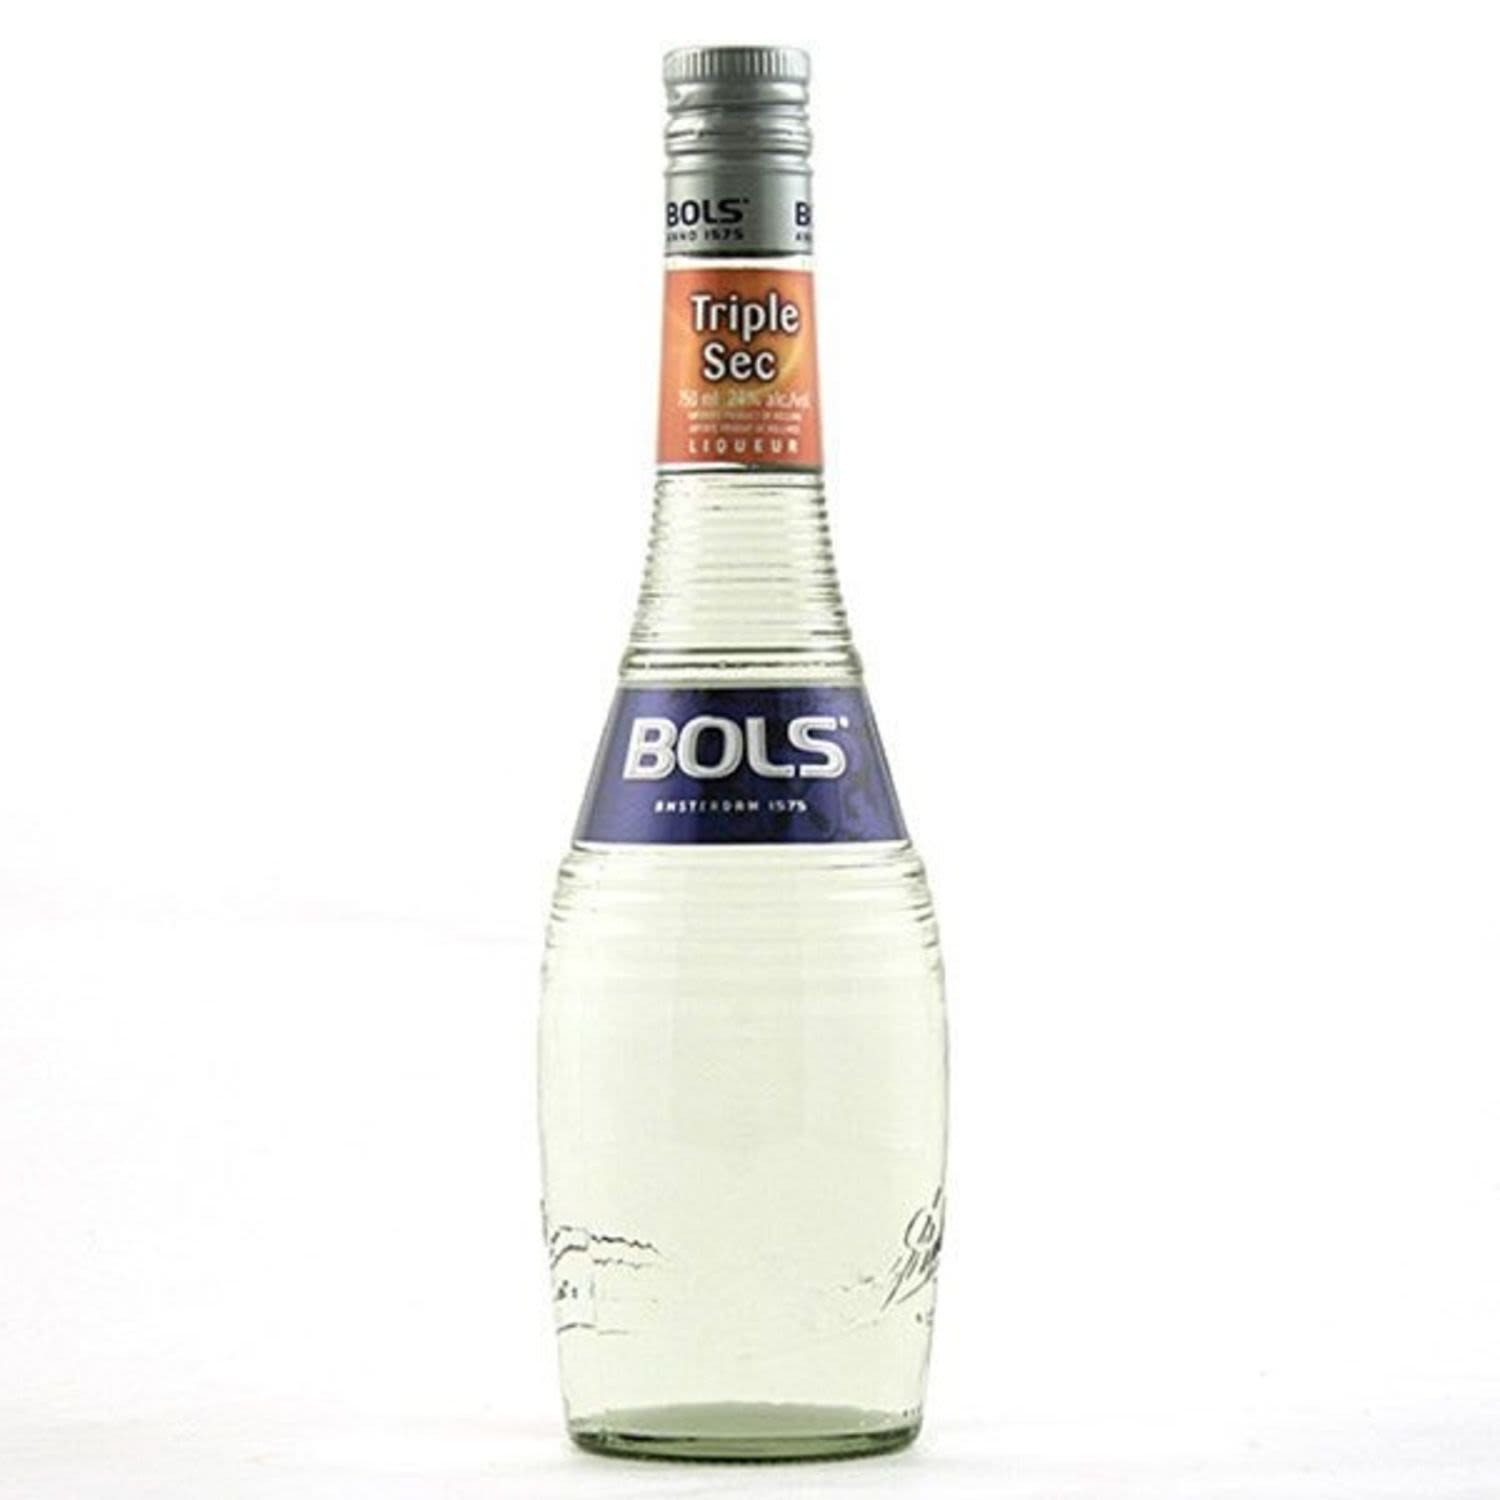 Bols Triple Sec Curacao 500mL Bottle